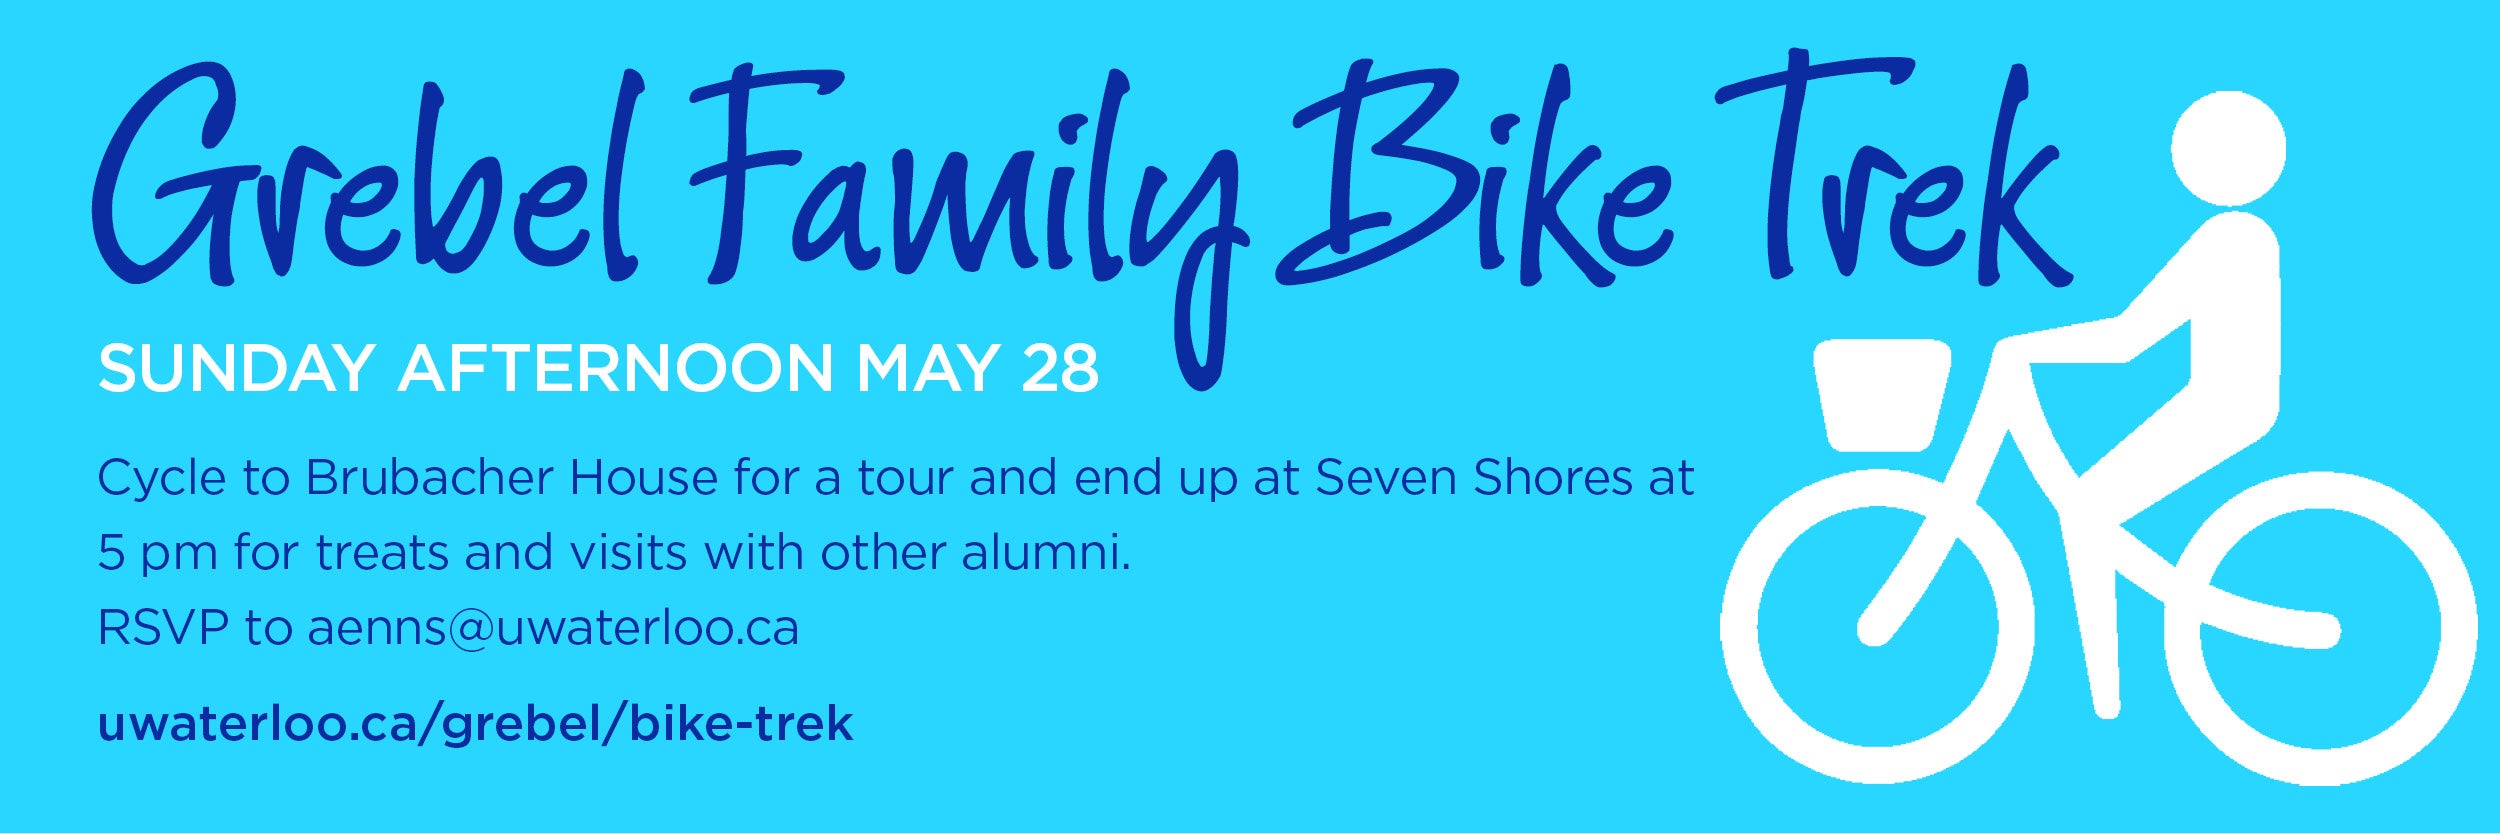 Grebel Family Bike Trip 2017 banner